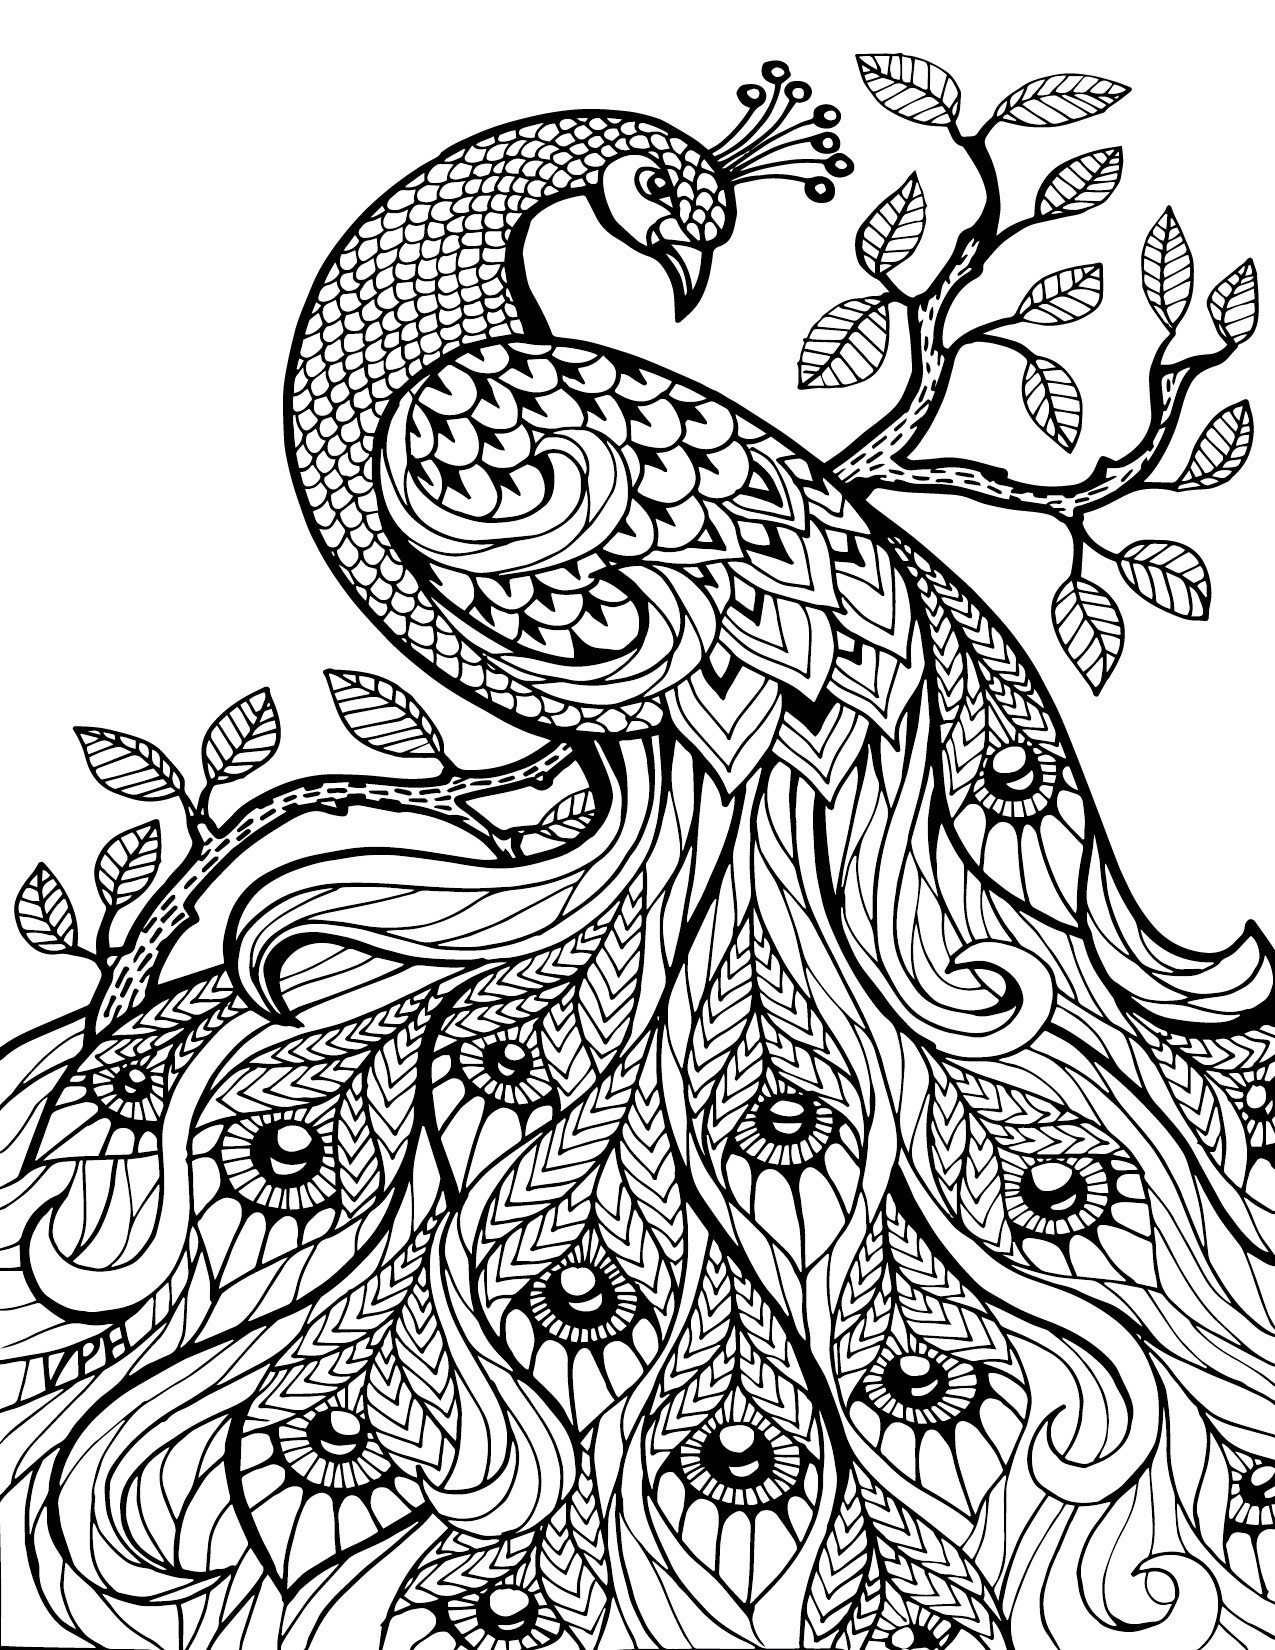 Mandala Animal Coloring Pages Fresh Pattern Animal Coloring Pages and Print for Free